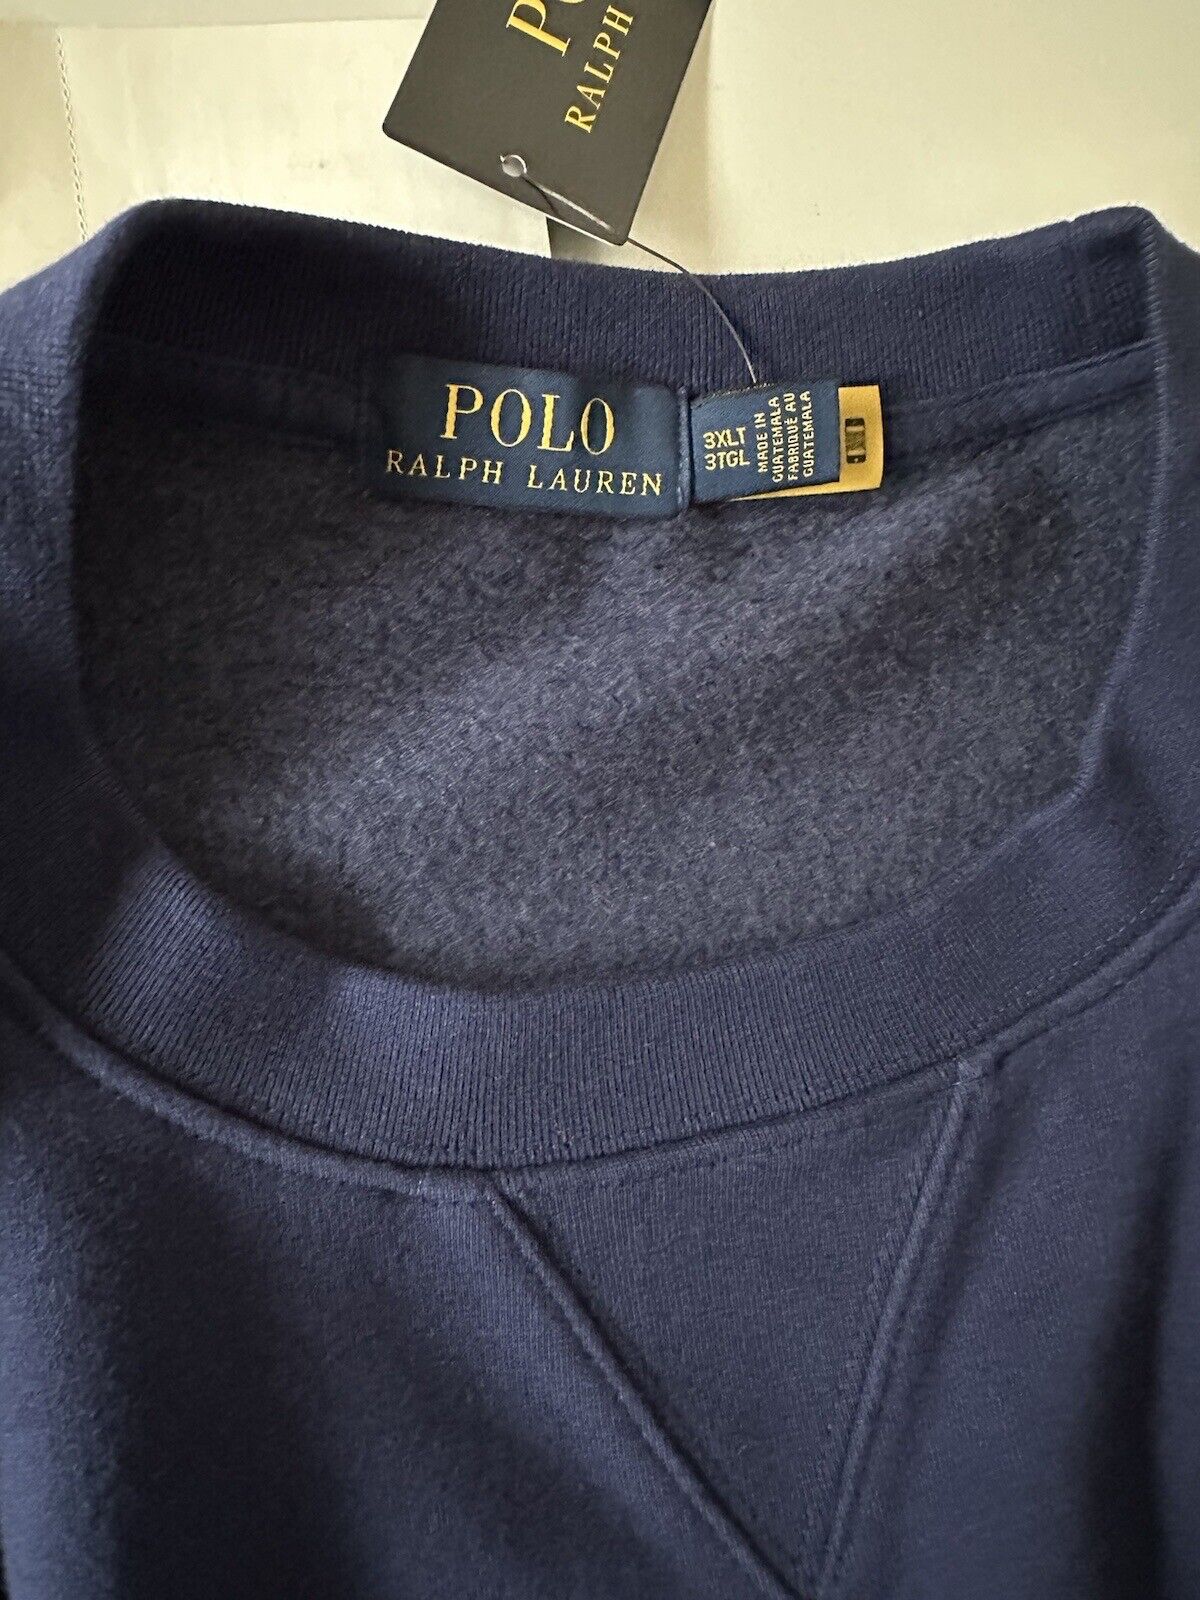 Neu $168 Polo Ralph Lauren Beach Bear Sweatshirt Blau 3XLT/2TGL 